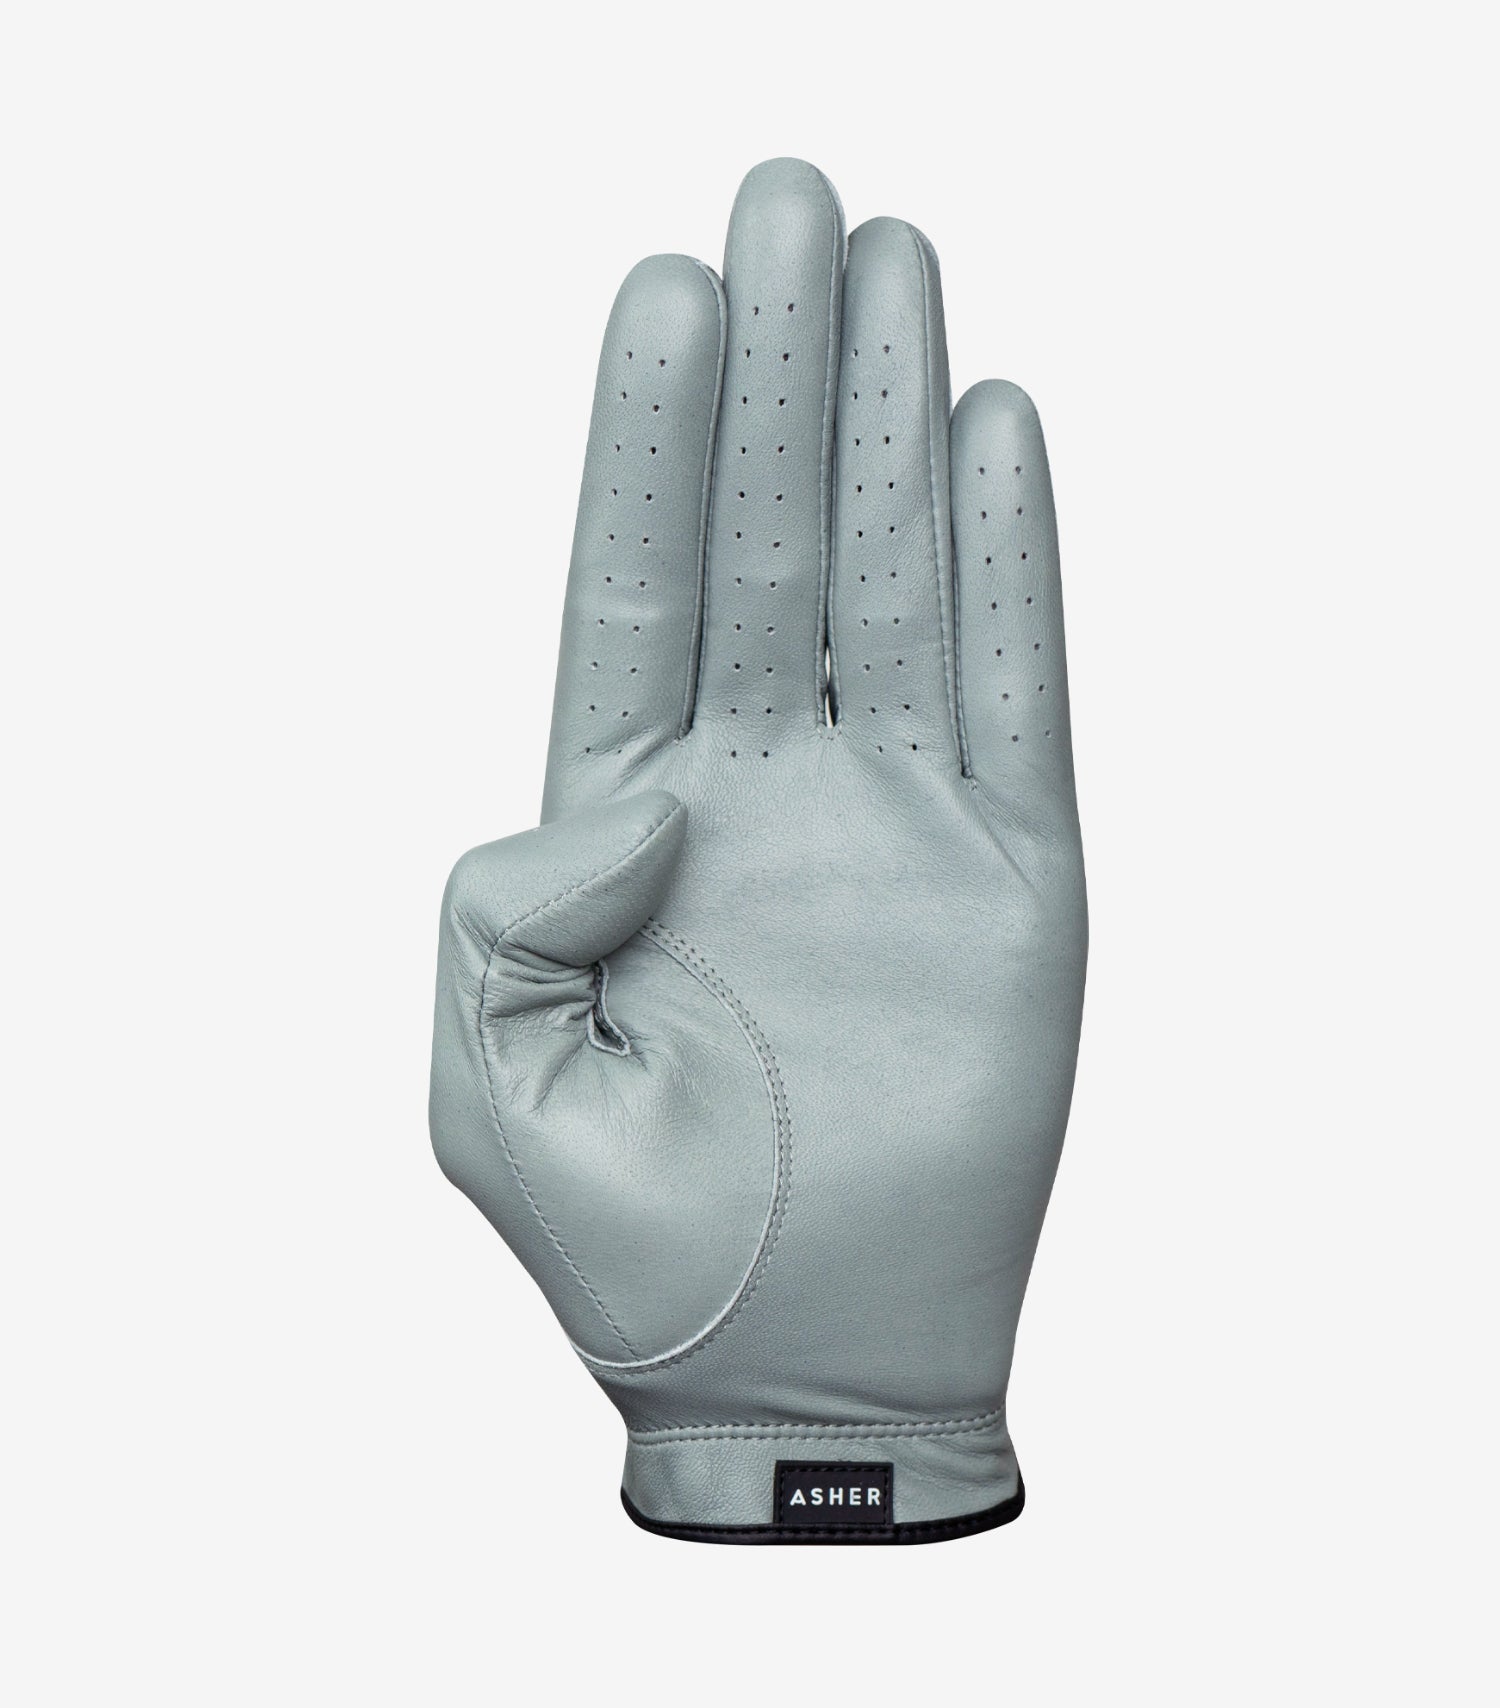 ASHER Golf | All Premium Golf Gloves